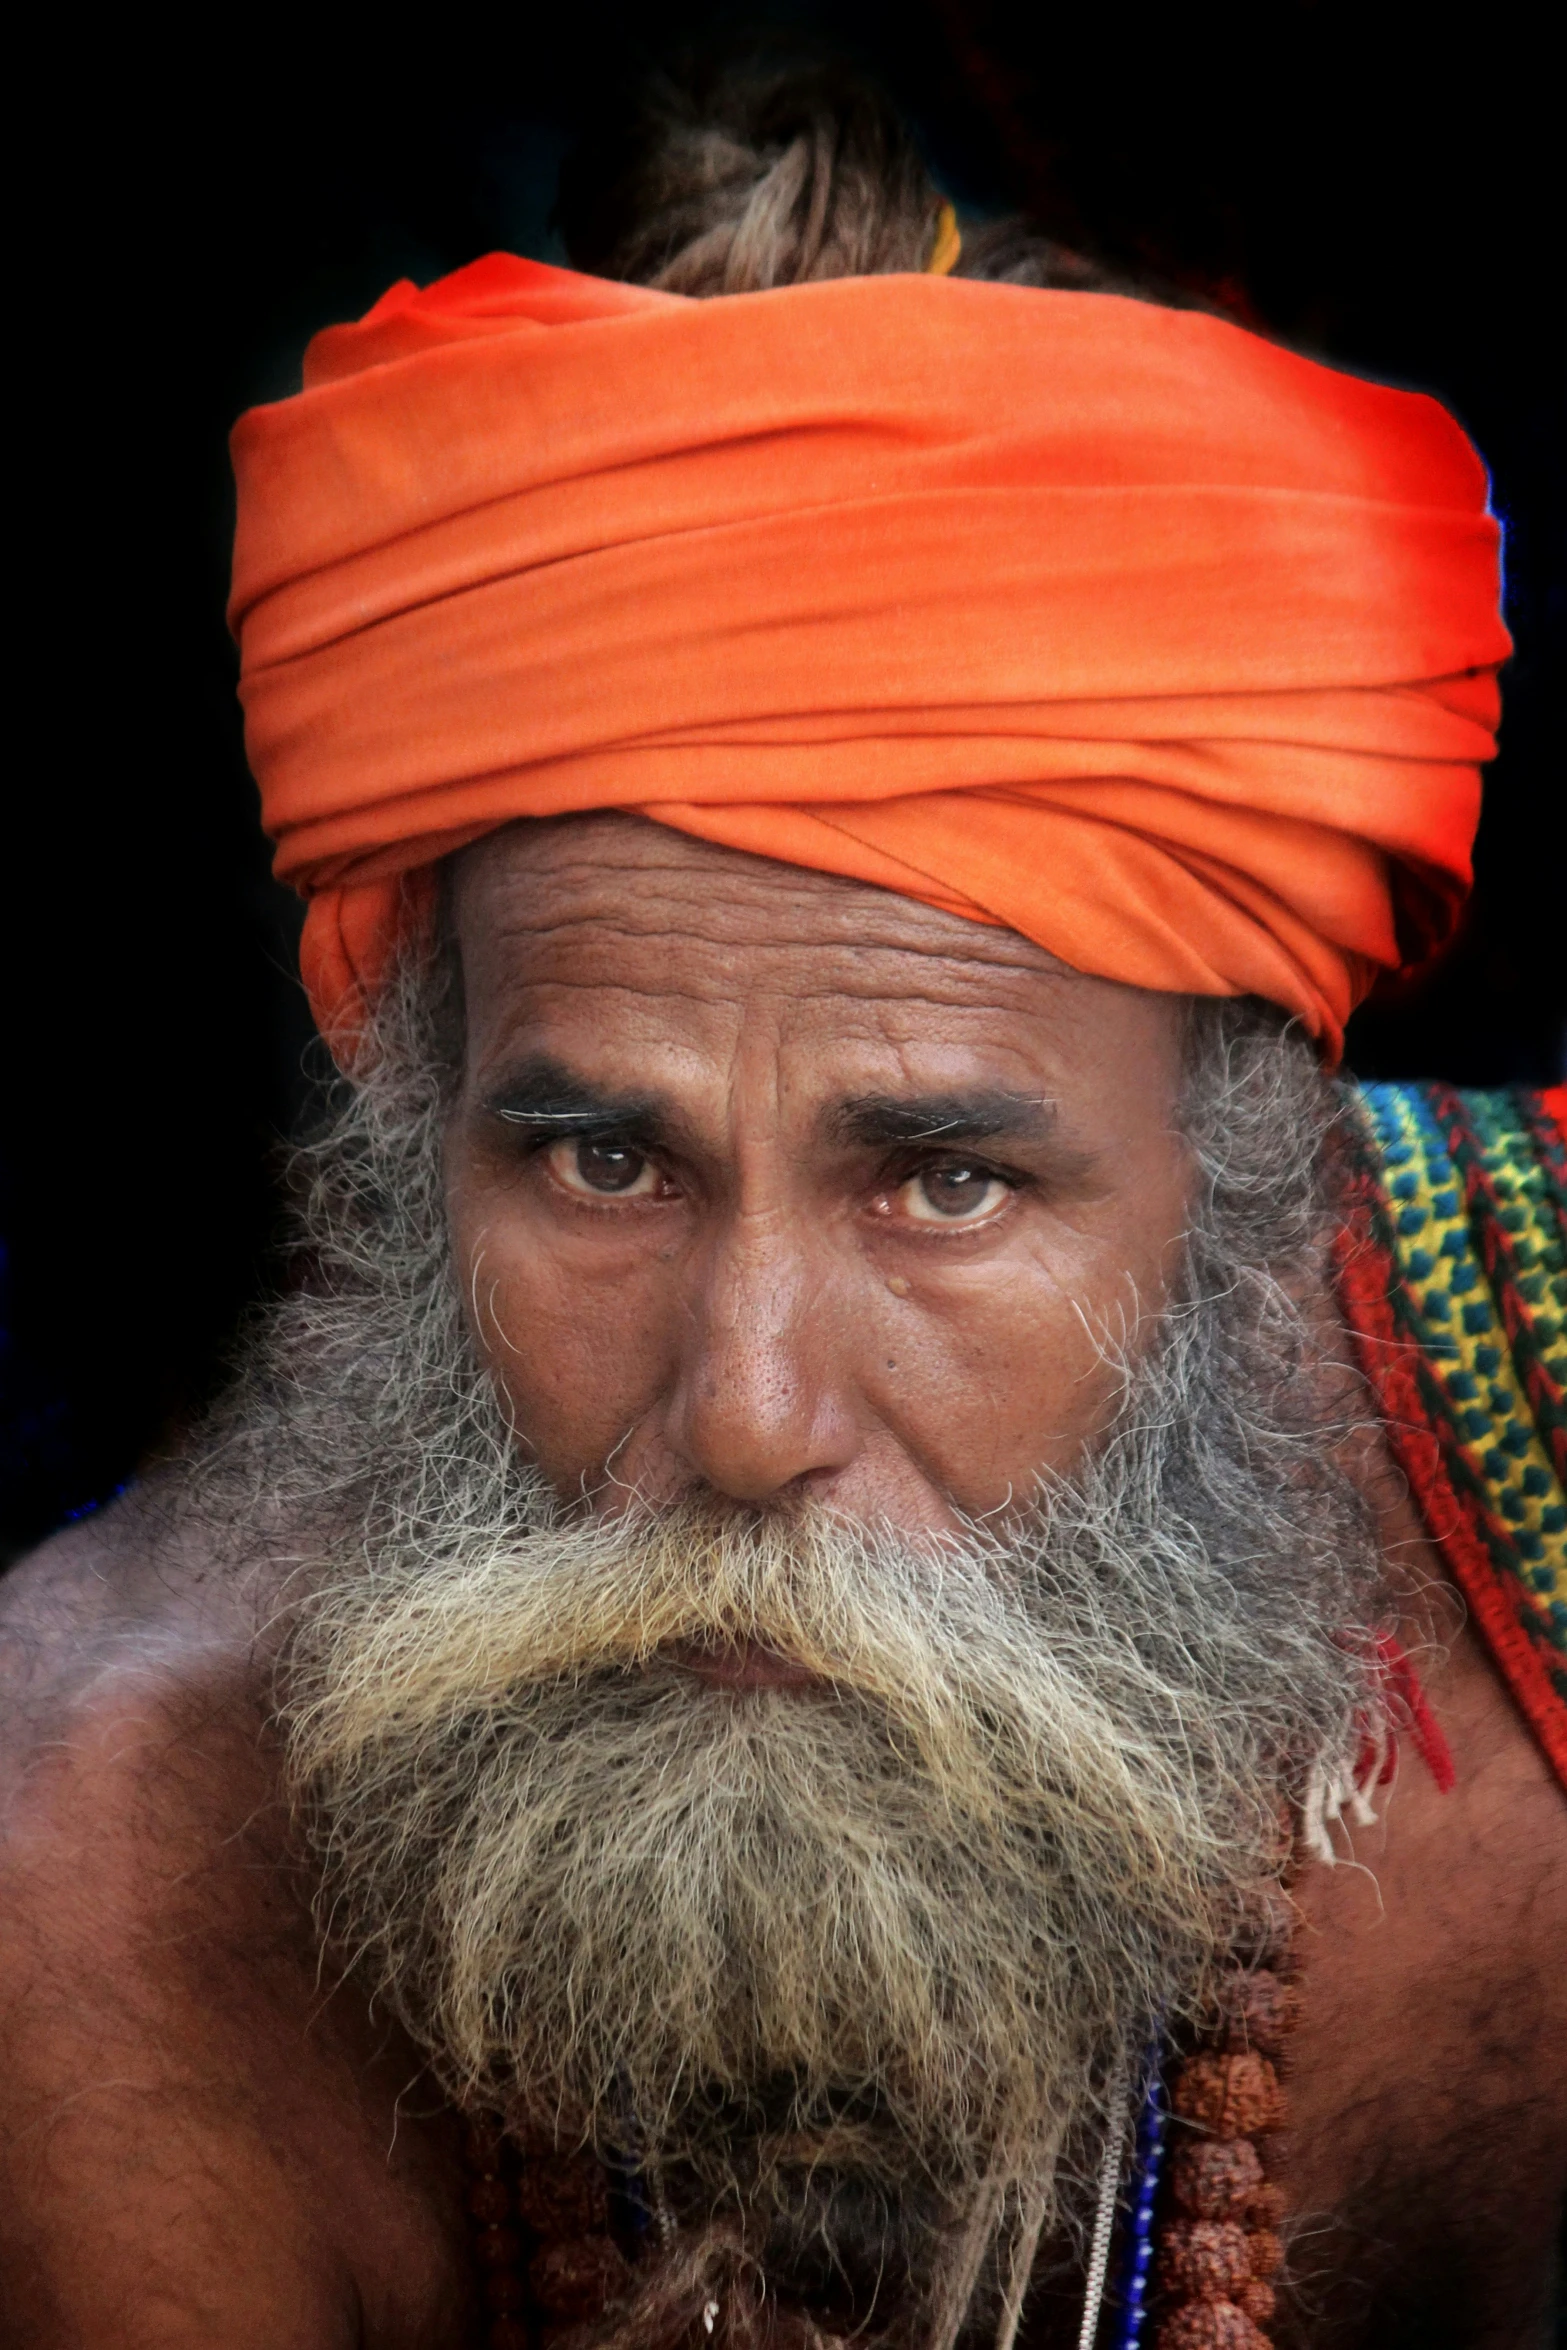 a man with orange head scarf and turban